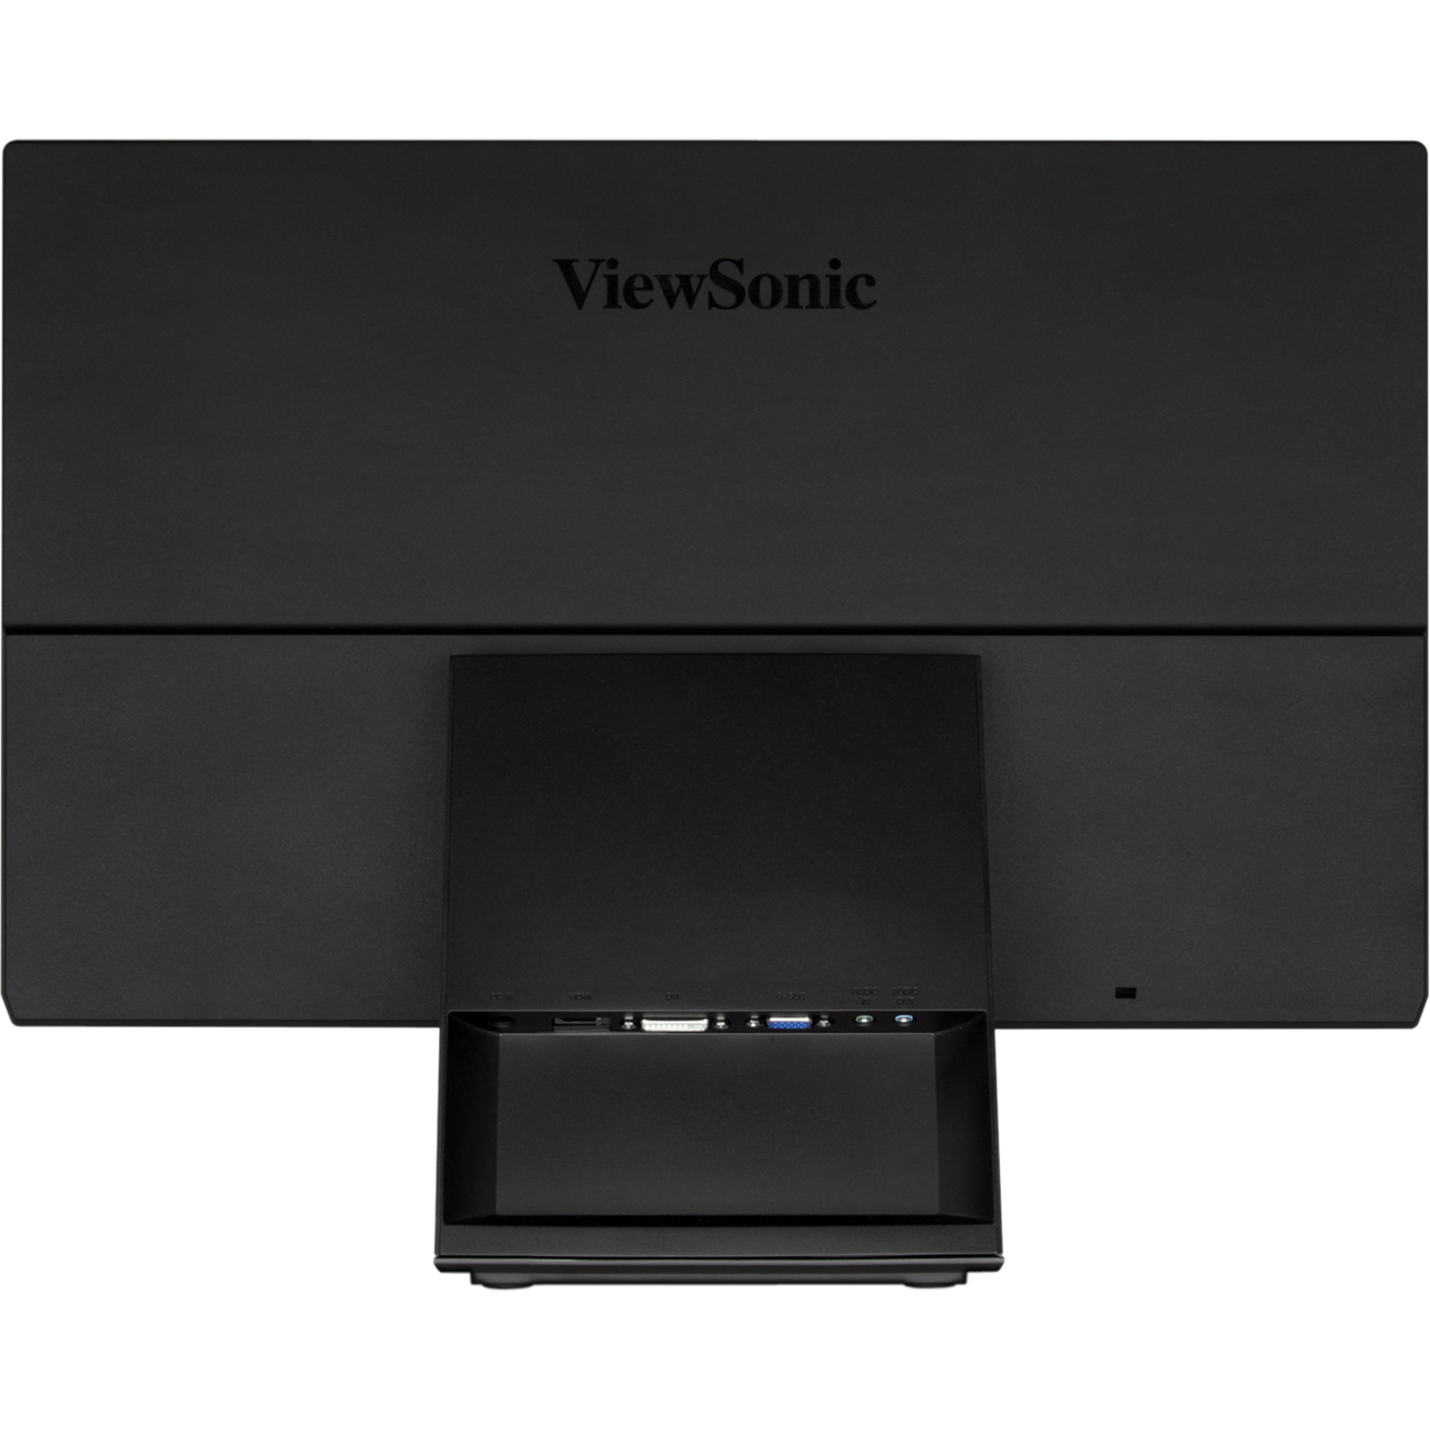 ViewSonic VX2370Smh-LED 23" Class Full HD LCD Monitor - image 2 of 5